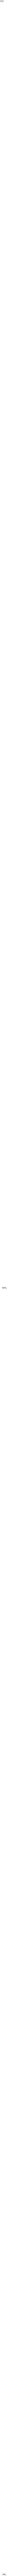 Beryllium aluminate.